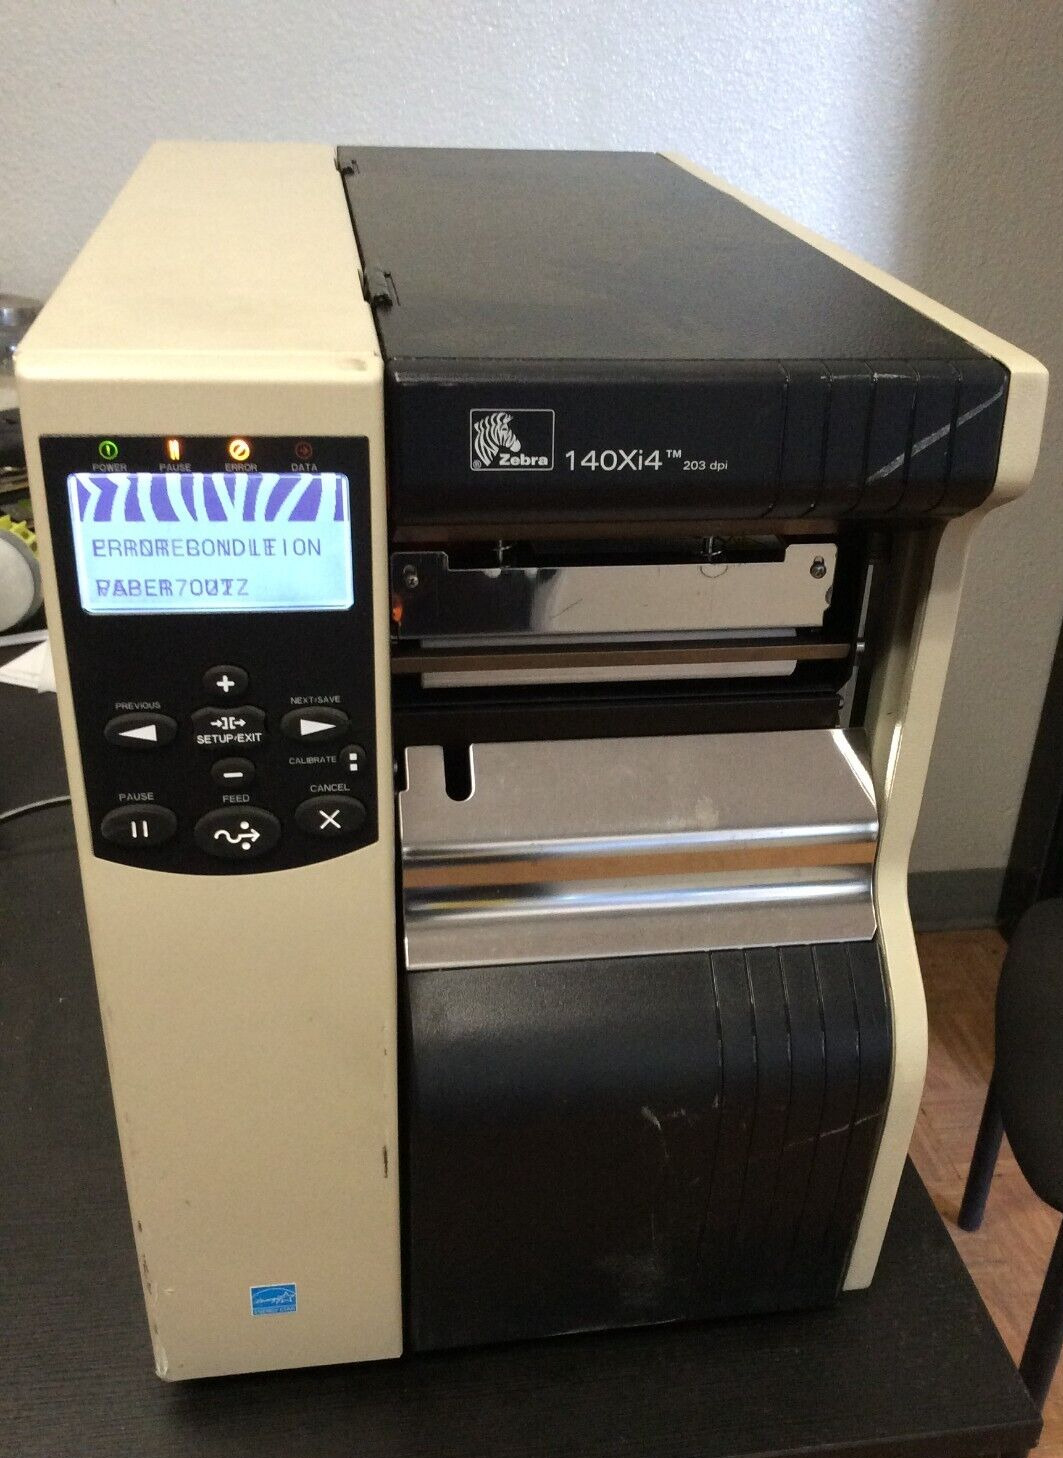 Zebra 140xi4 Thermal Label Printer [For Parts]